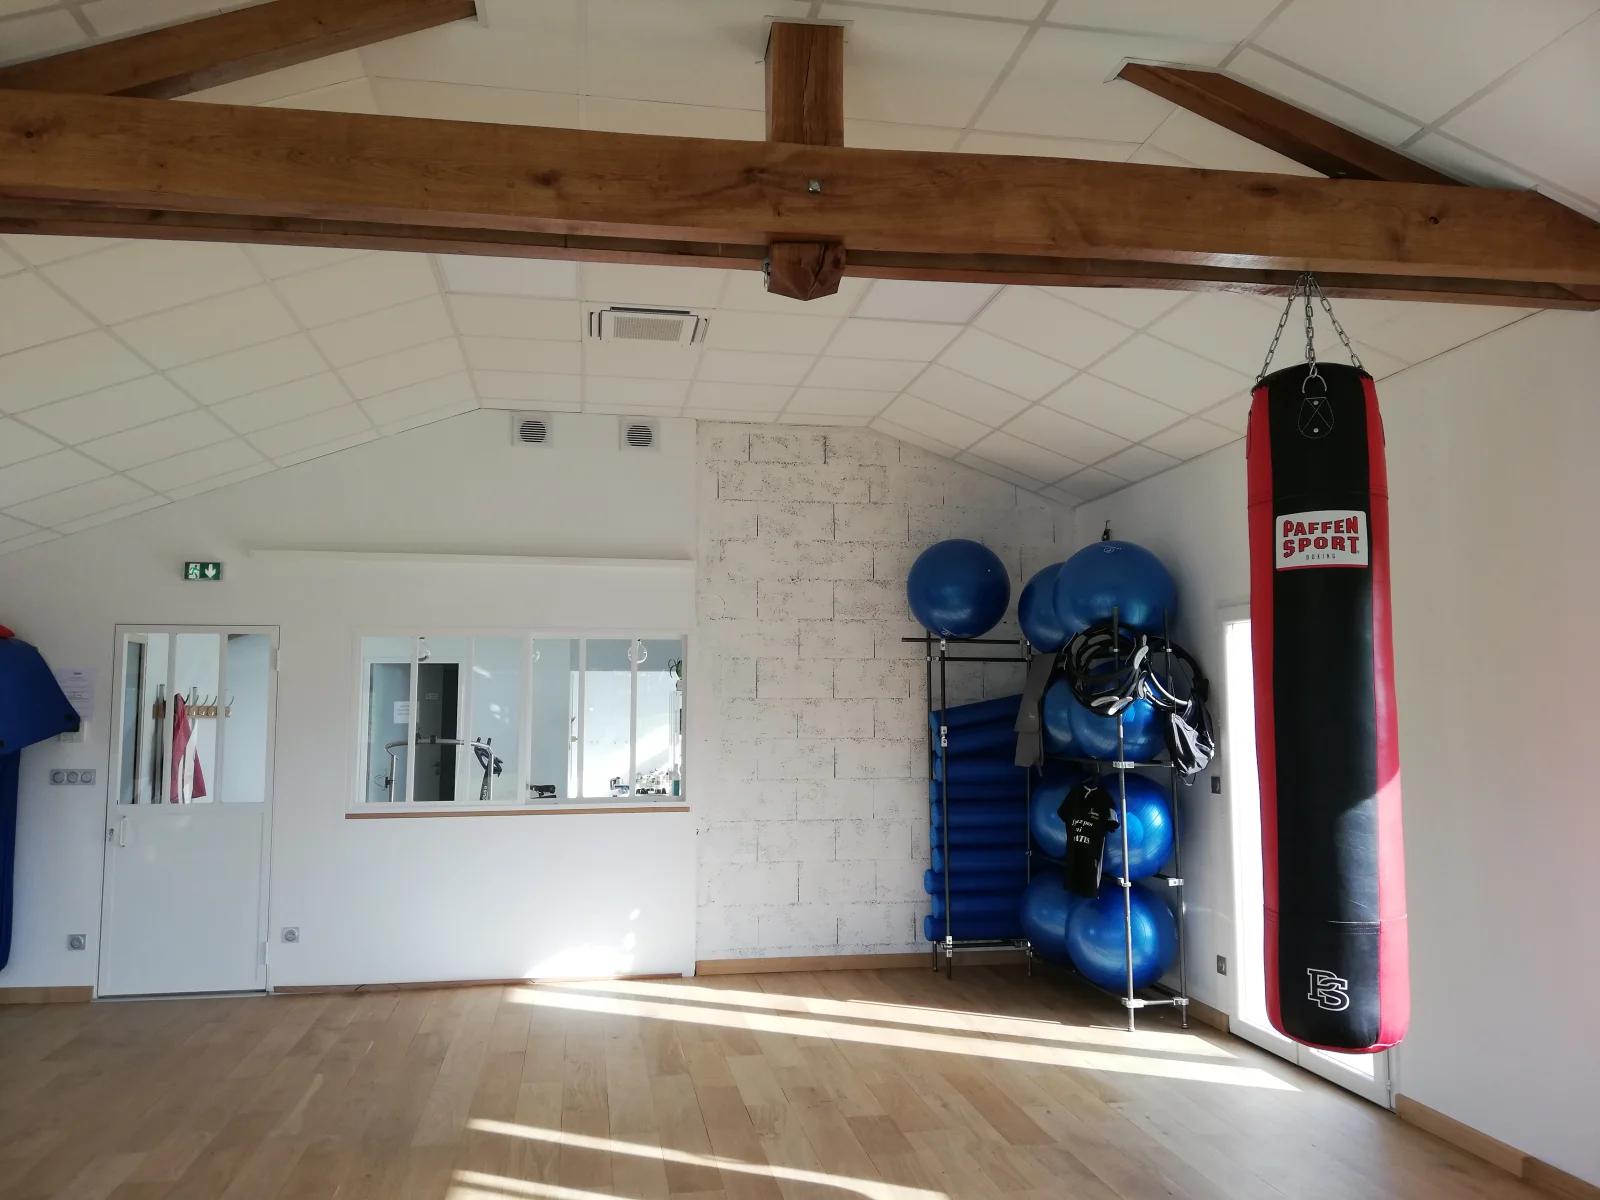 Space Salle de sport / Pilates studio / Yoga - 2